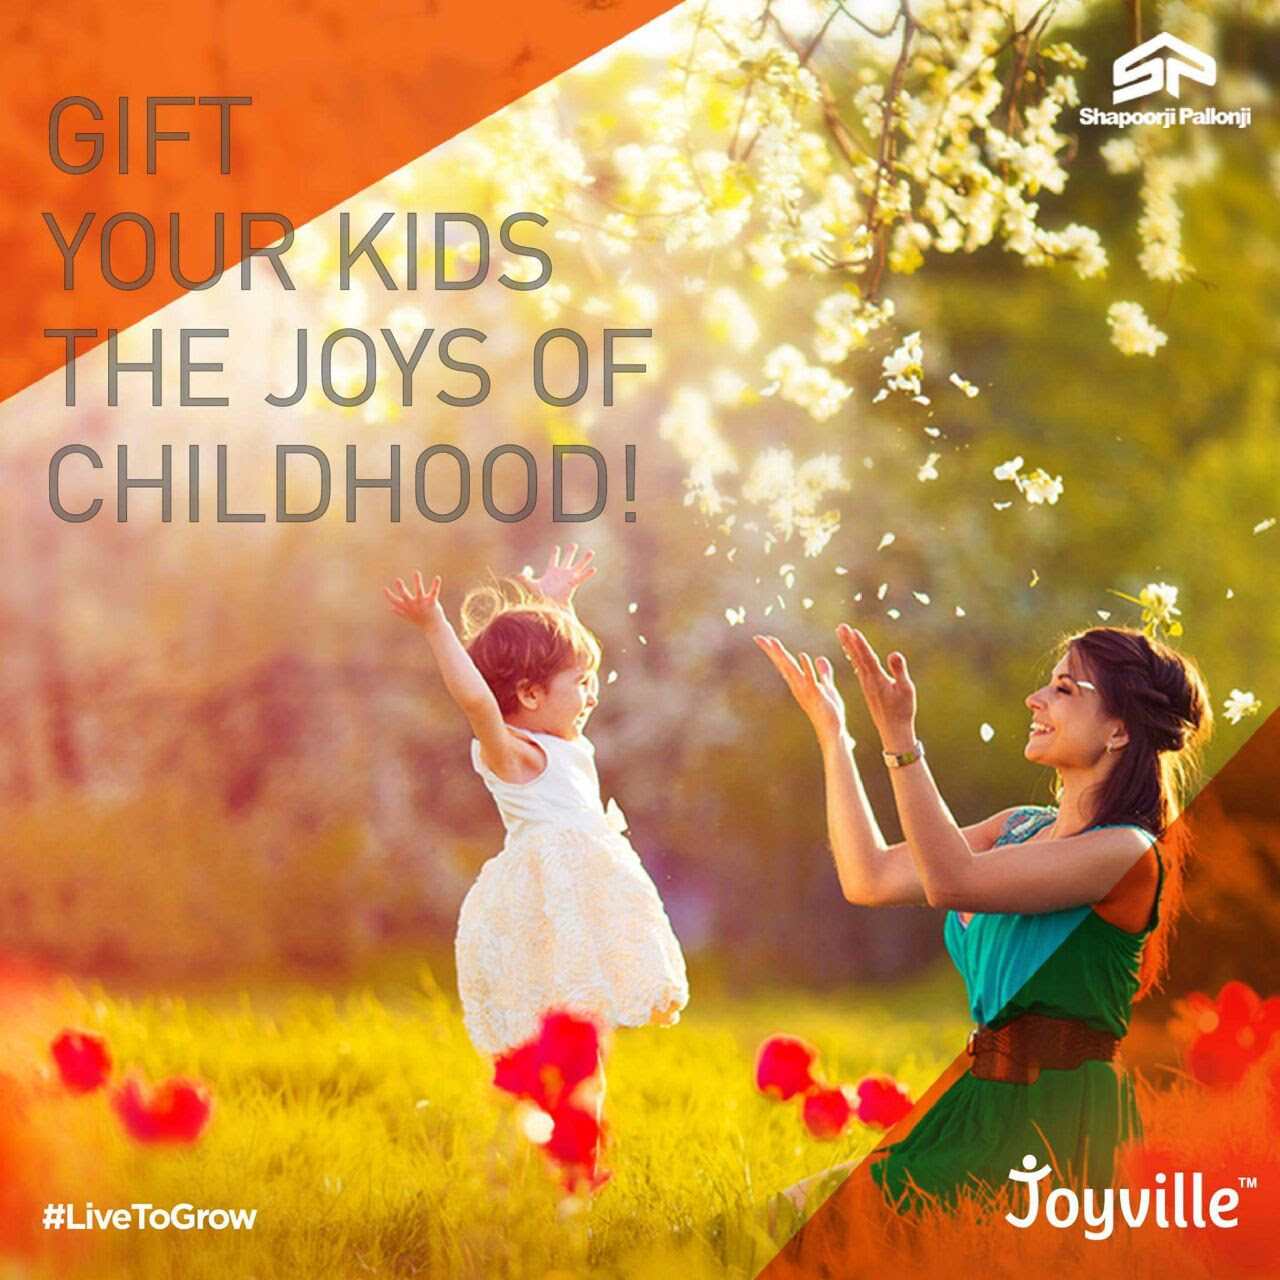 Gift your kids the joy of childhood by residing at Shapoorji Pallonji Joyville in Mumbai